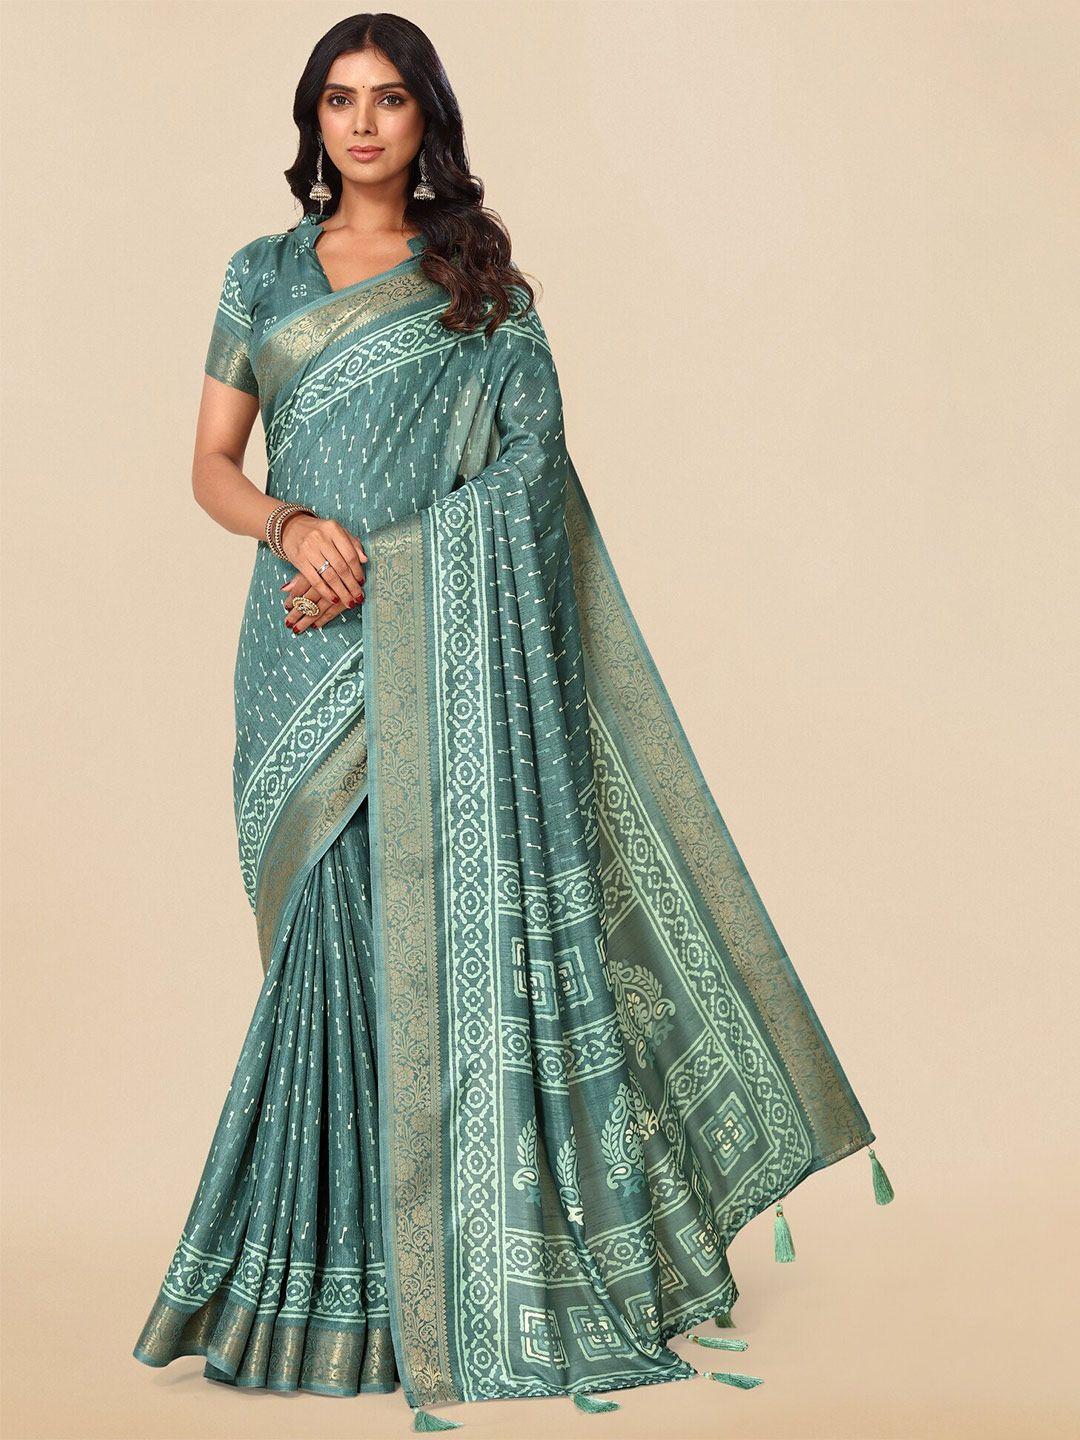 mirchi fashion teal & white ethnic motifs zari block printed saree